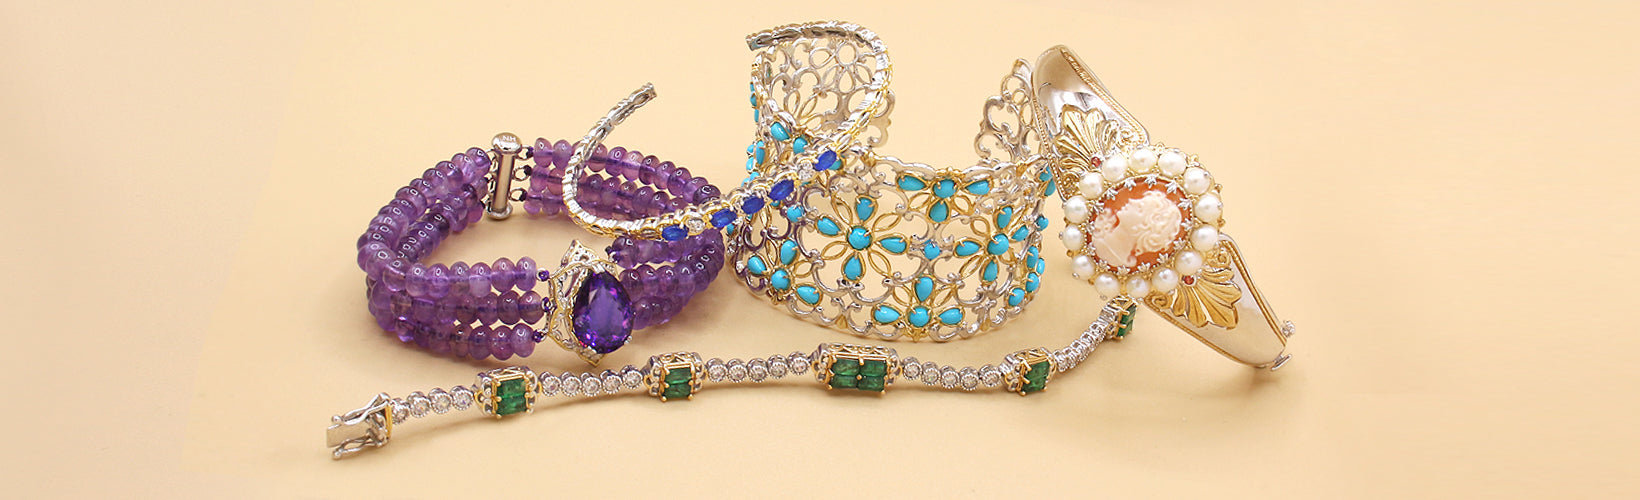 Gems En Vogue Bracelets Collection